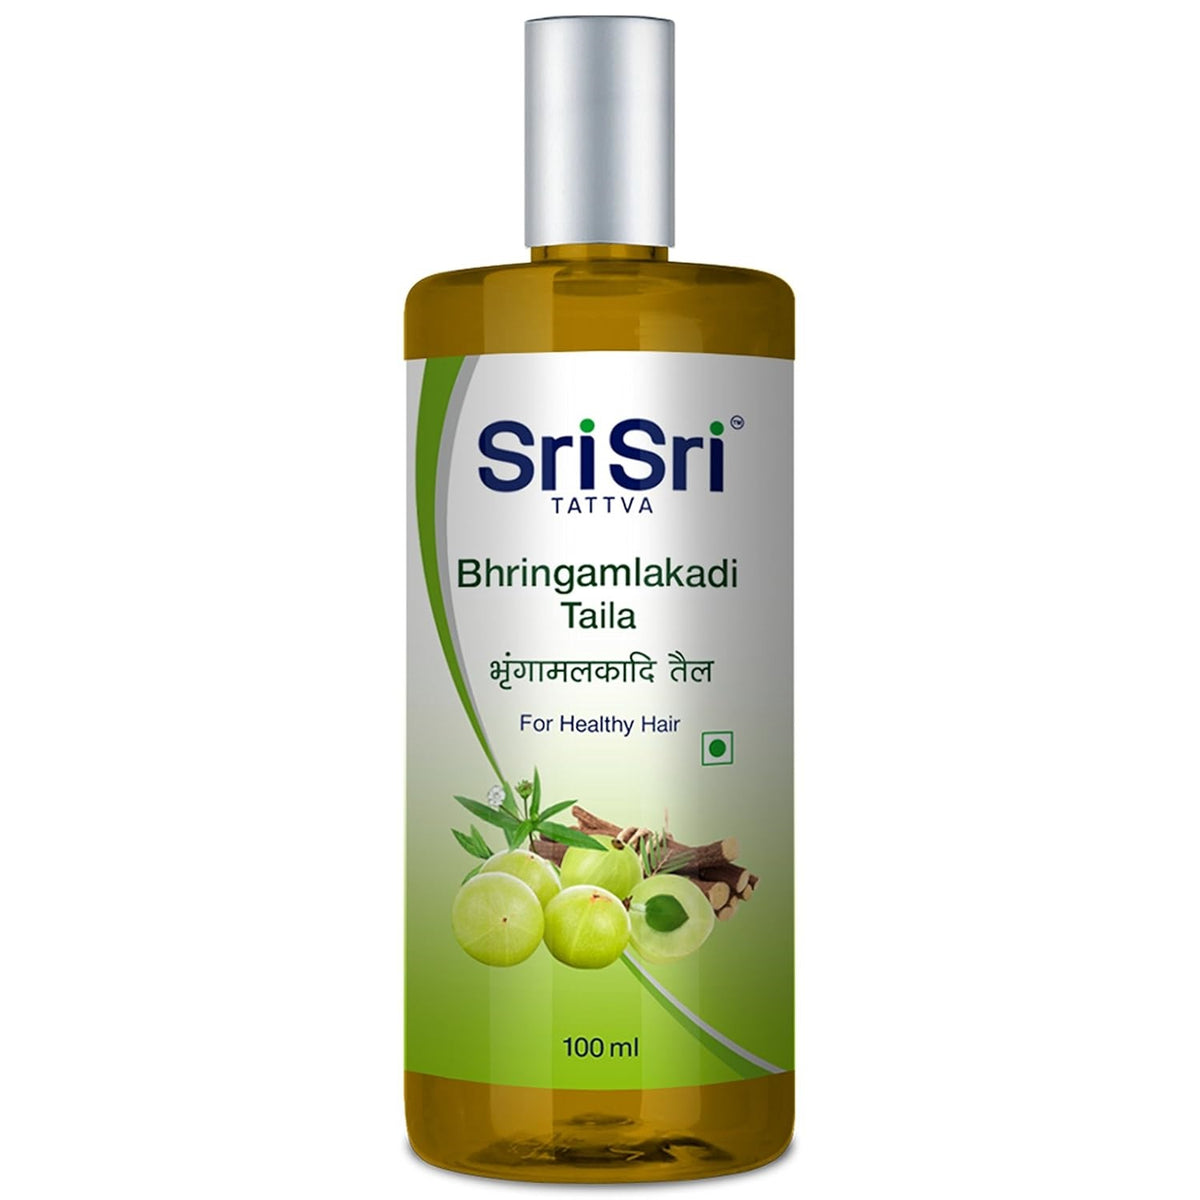 Sri Sri Tattva Ayurvedic Bhringamlakadi For Healthy Hair Taila Oil 100ml